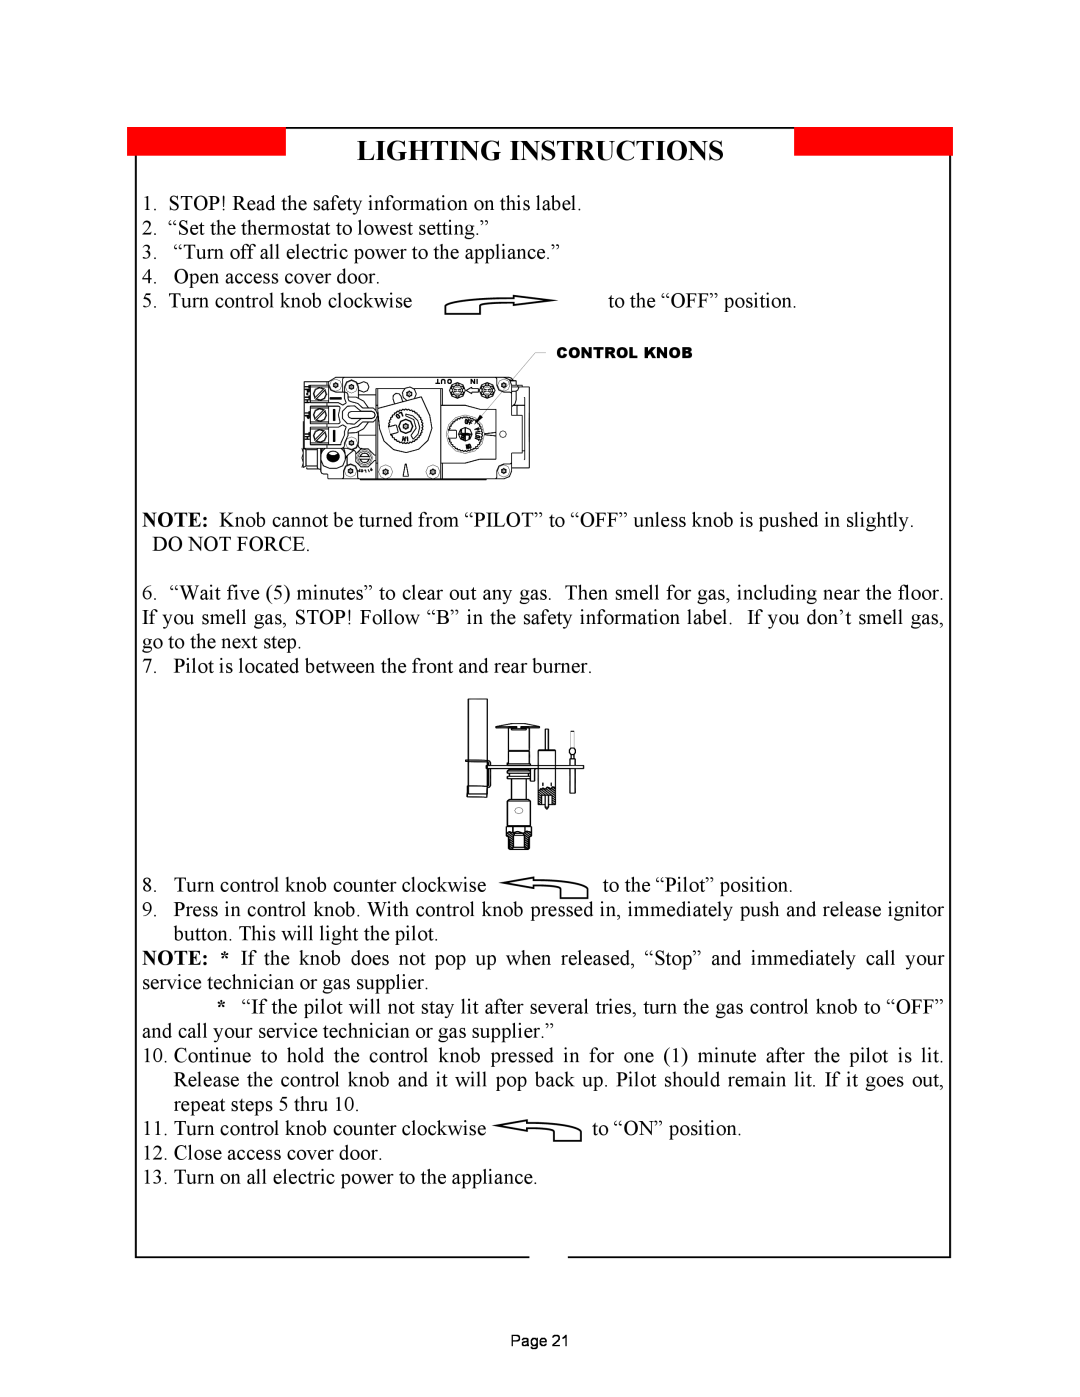 New Buck Corporation DV1000 manual Lighting Instructions 